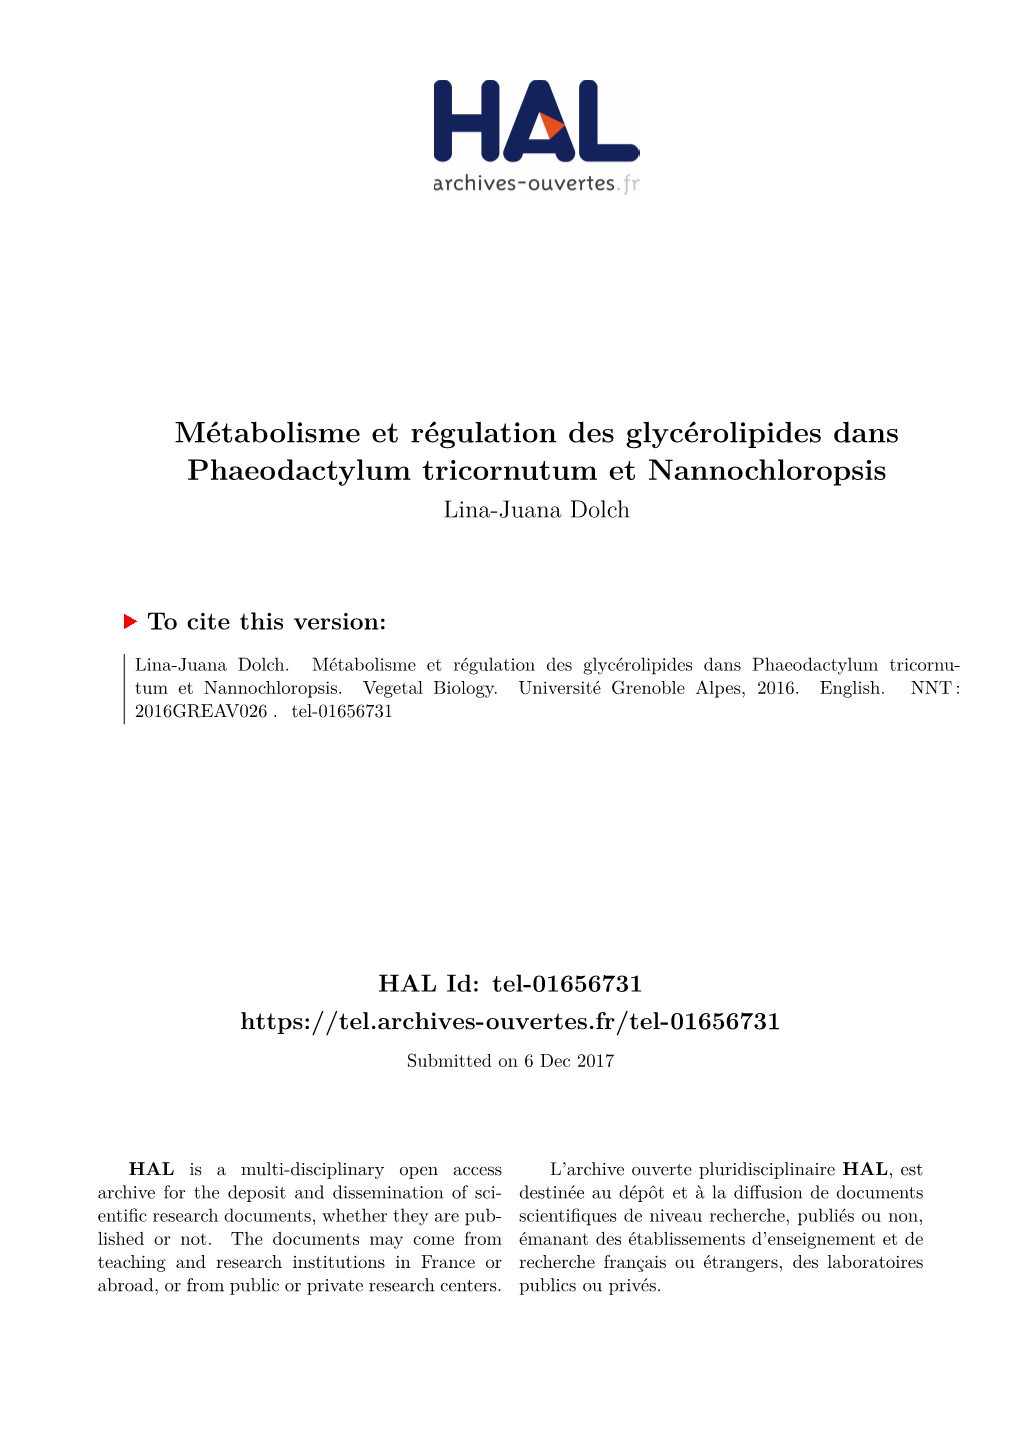 Métabolisme Et Régulation Des Glycérolipides Dans Phaeodactylum Tricornutum Et Nannochloropsis Lina-Juana Dolch